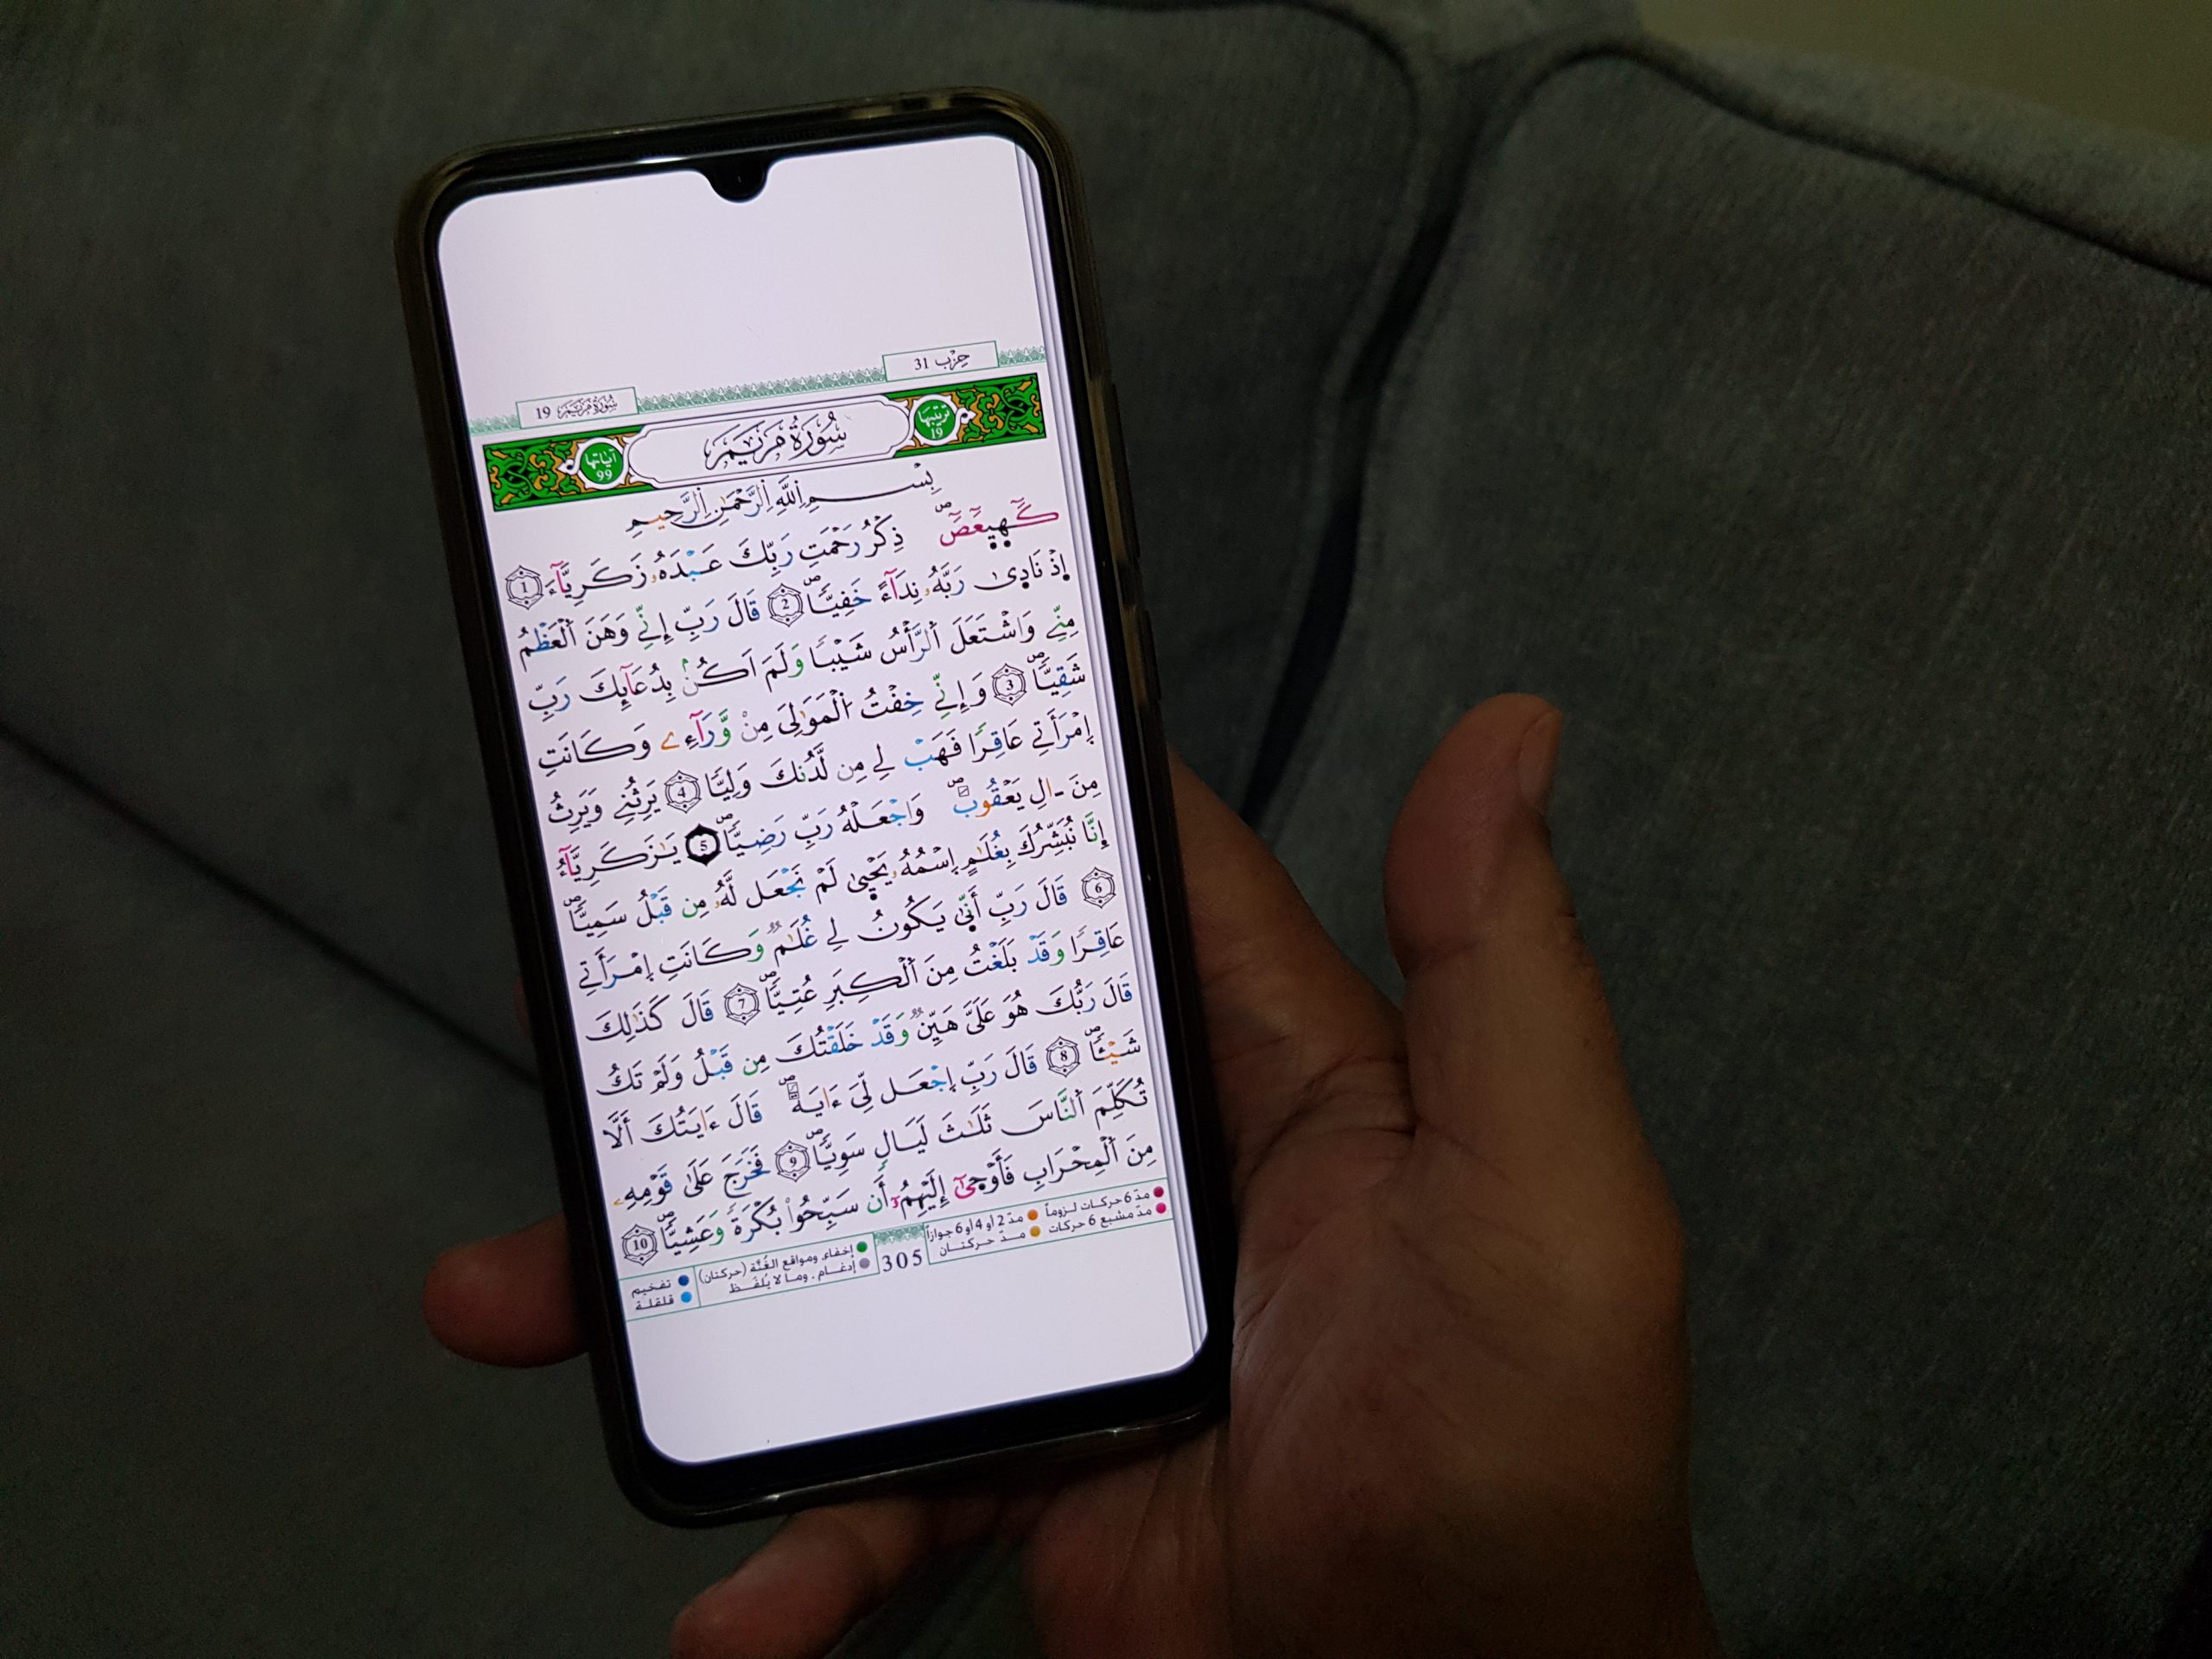 Saudi King Fahd Quran printing complex launches Warsh Qur’an app